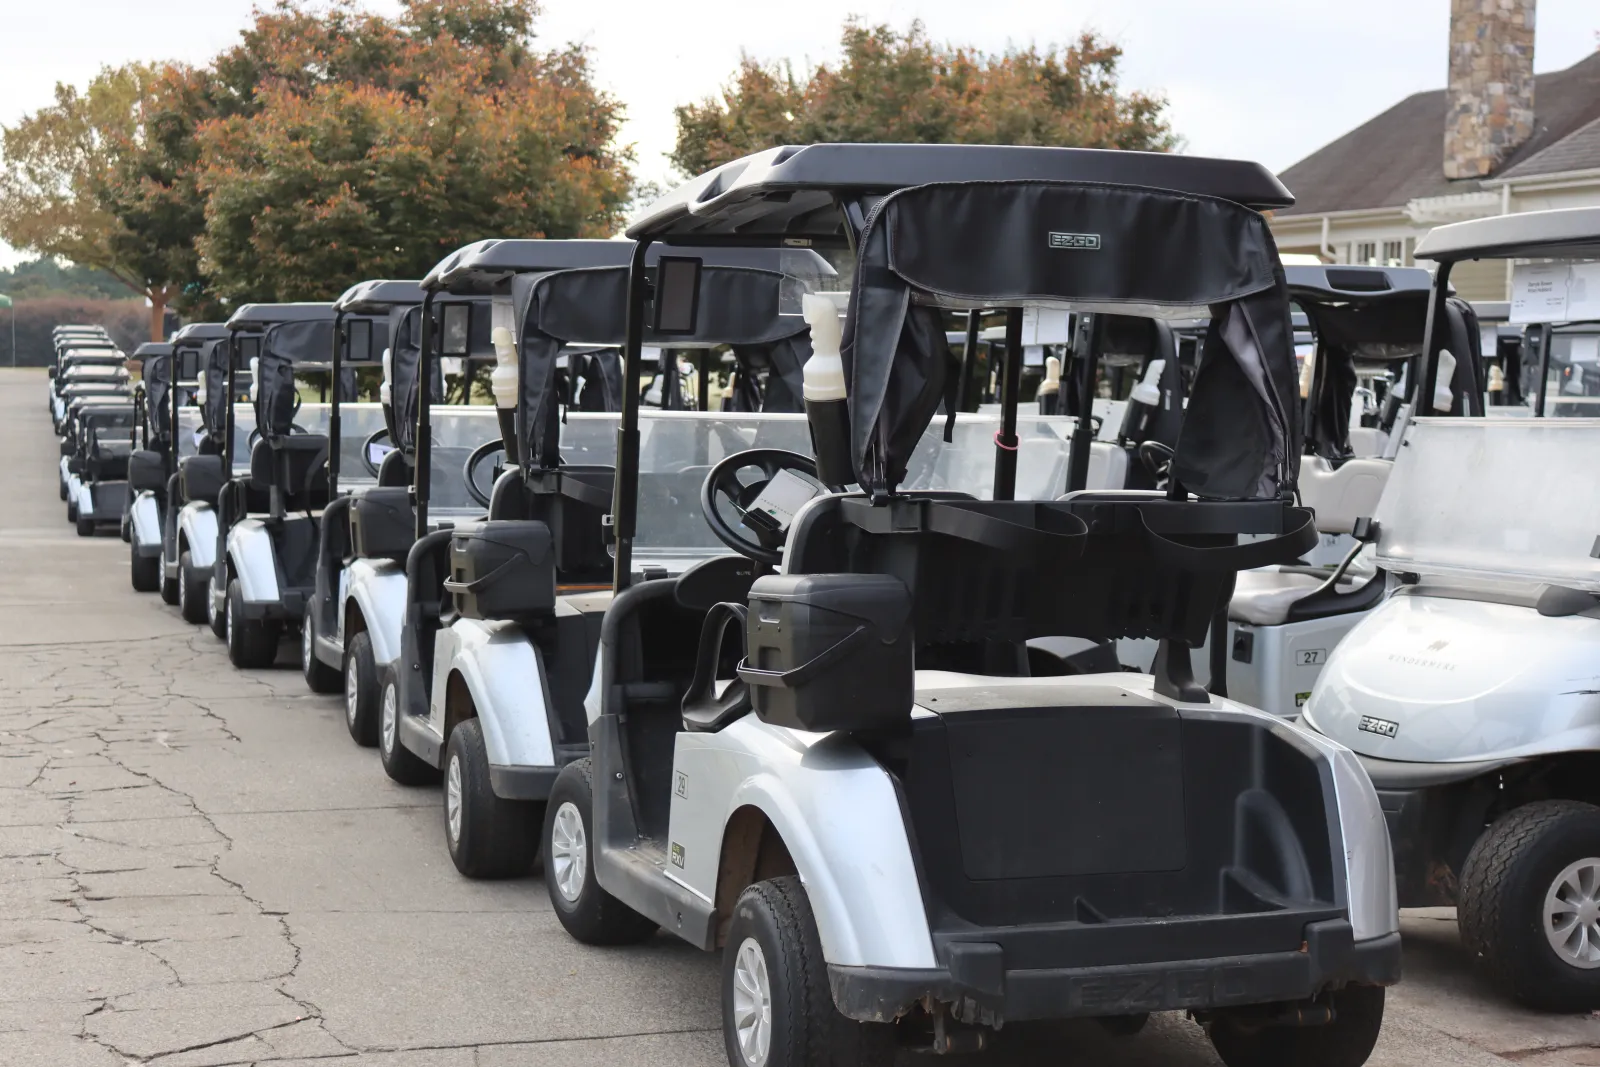 a row of golf carts